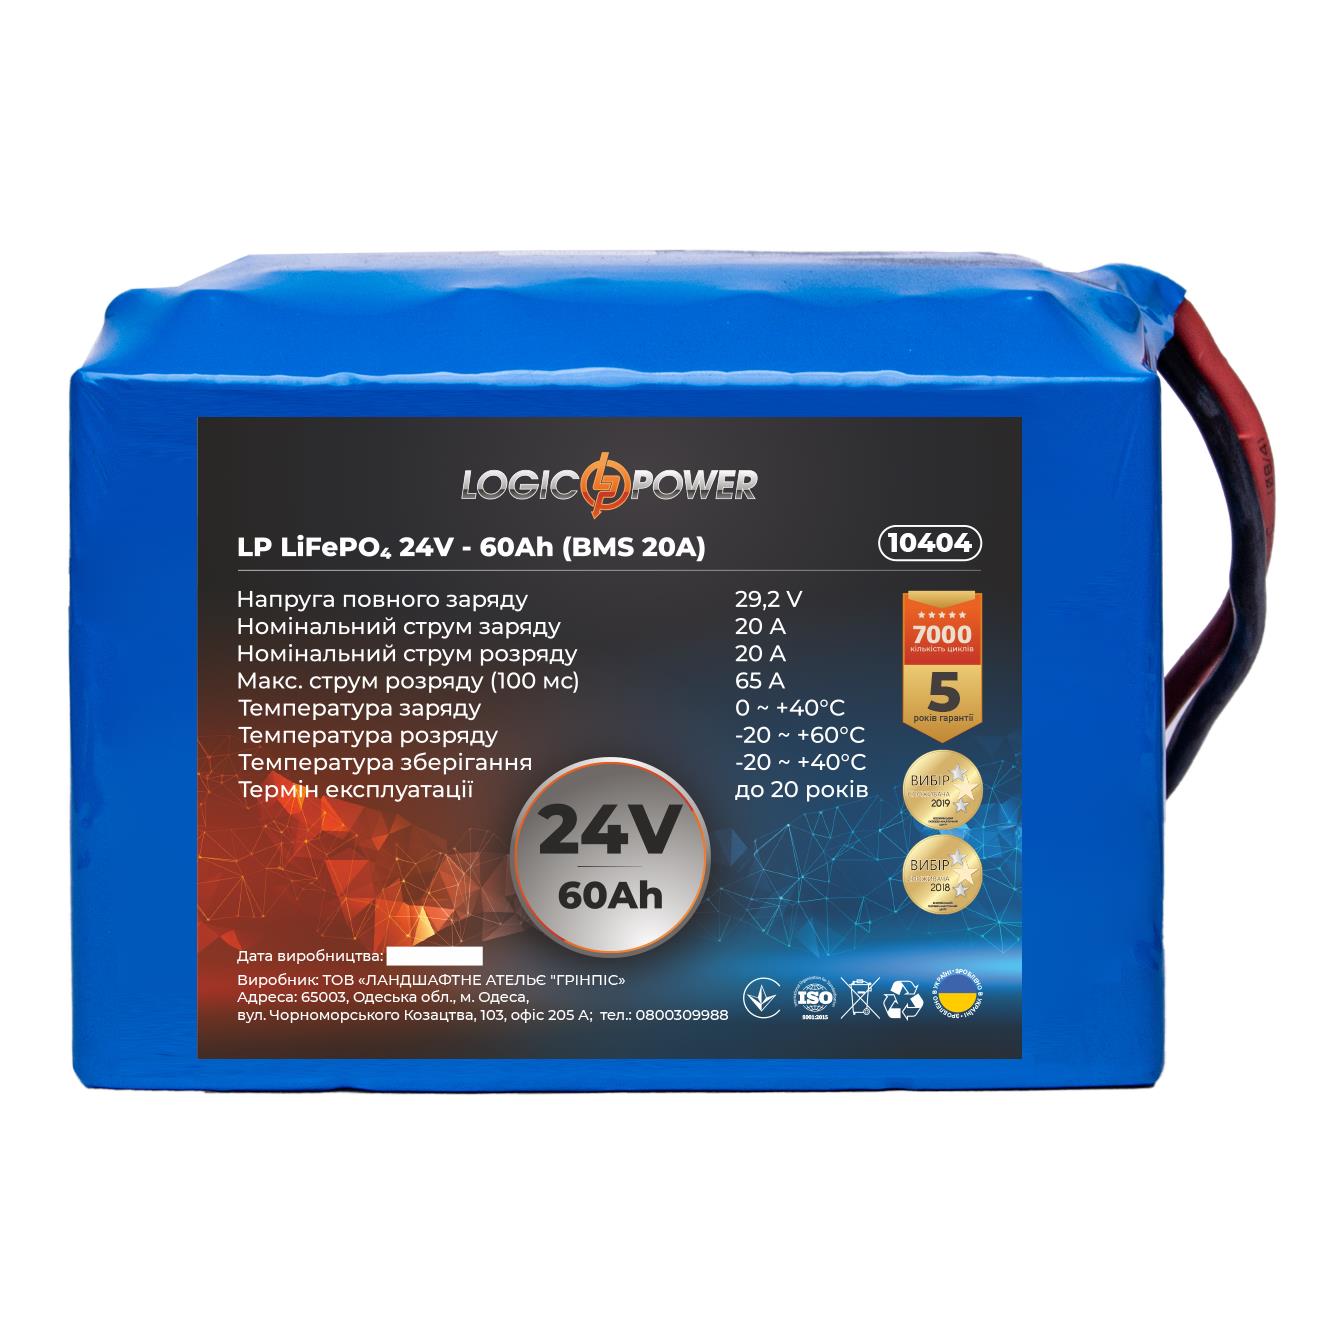 Аккумулятор 60 A·h LogicPower LP LiFePO4 24V - 60 Ah (BMS 20A) (10404)